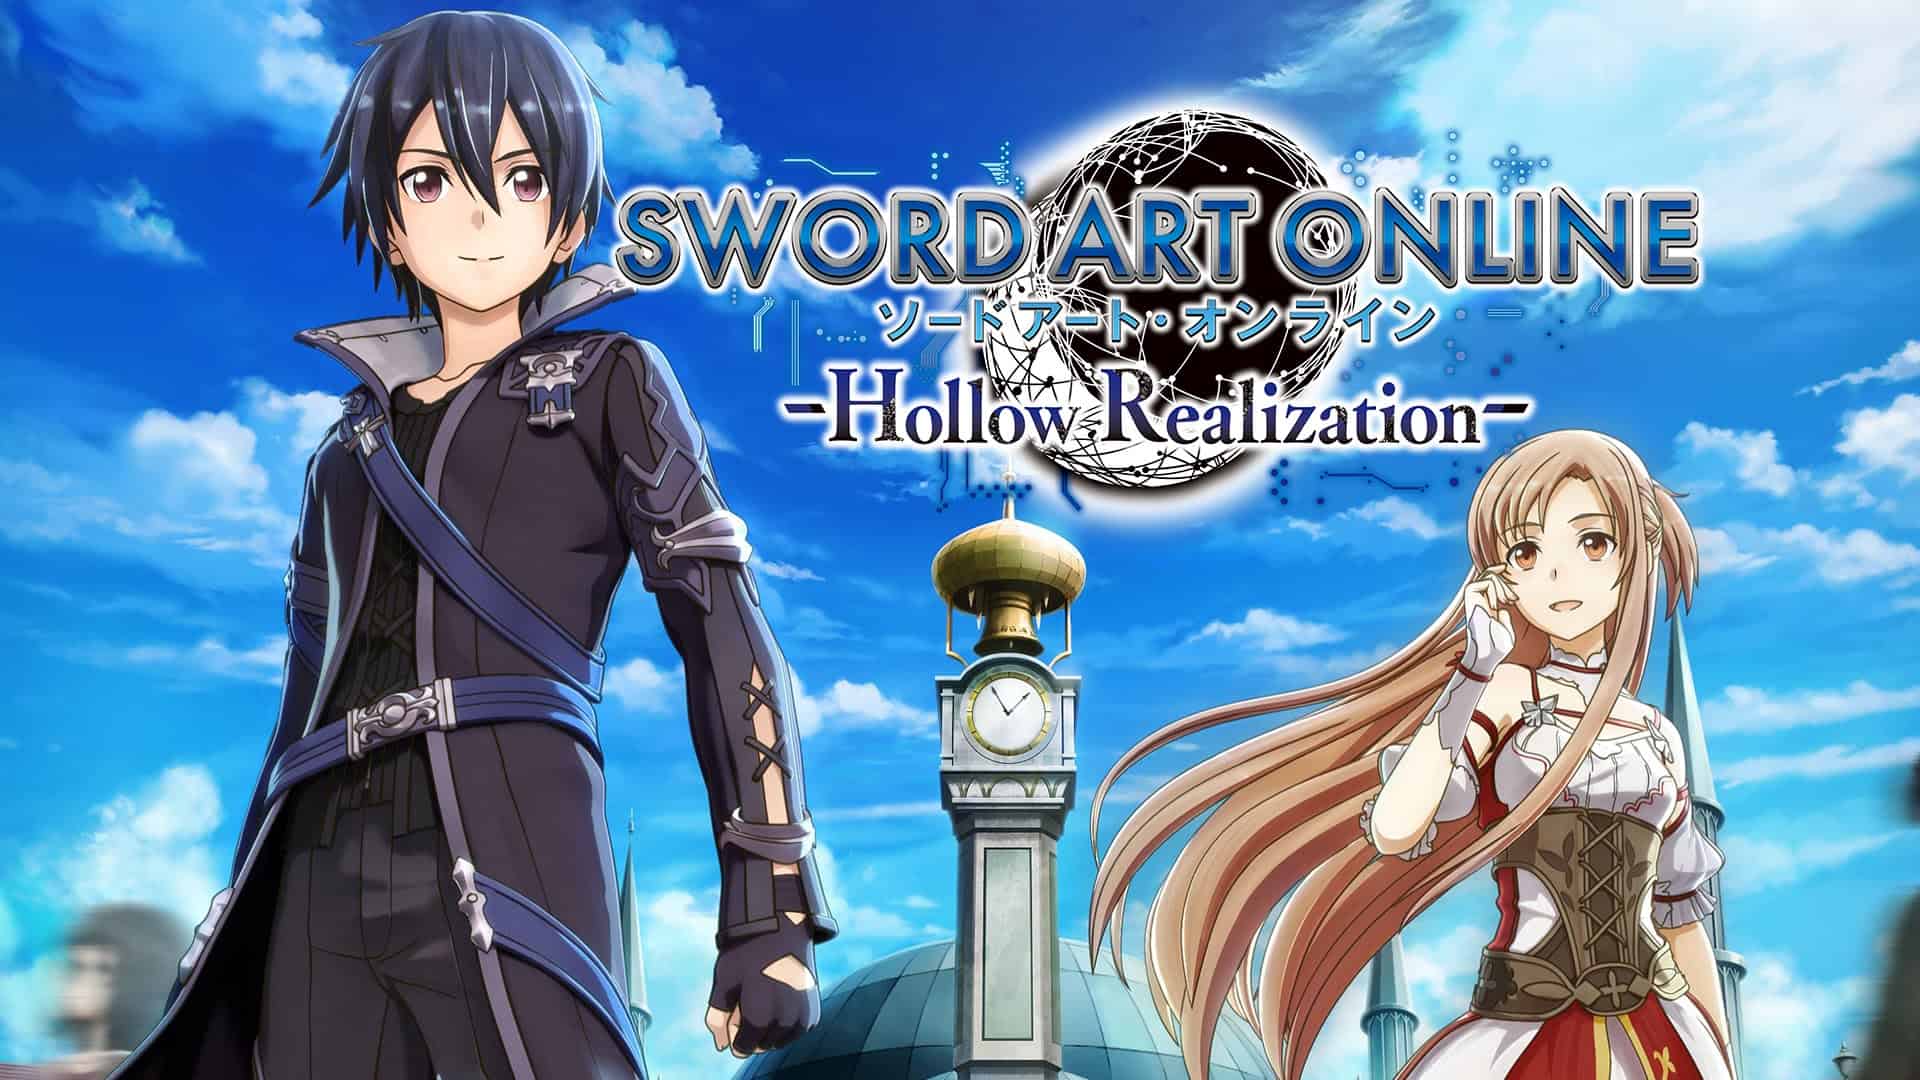 Online guide hollow dating art realization sword Sword art